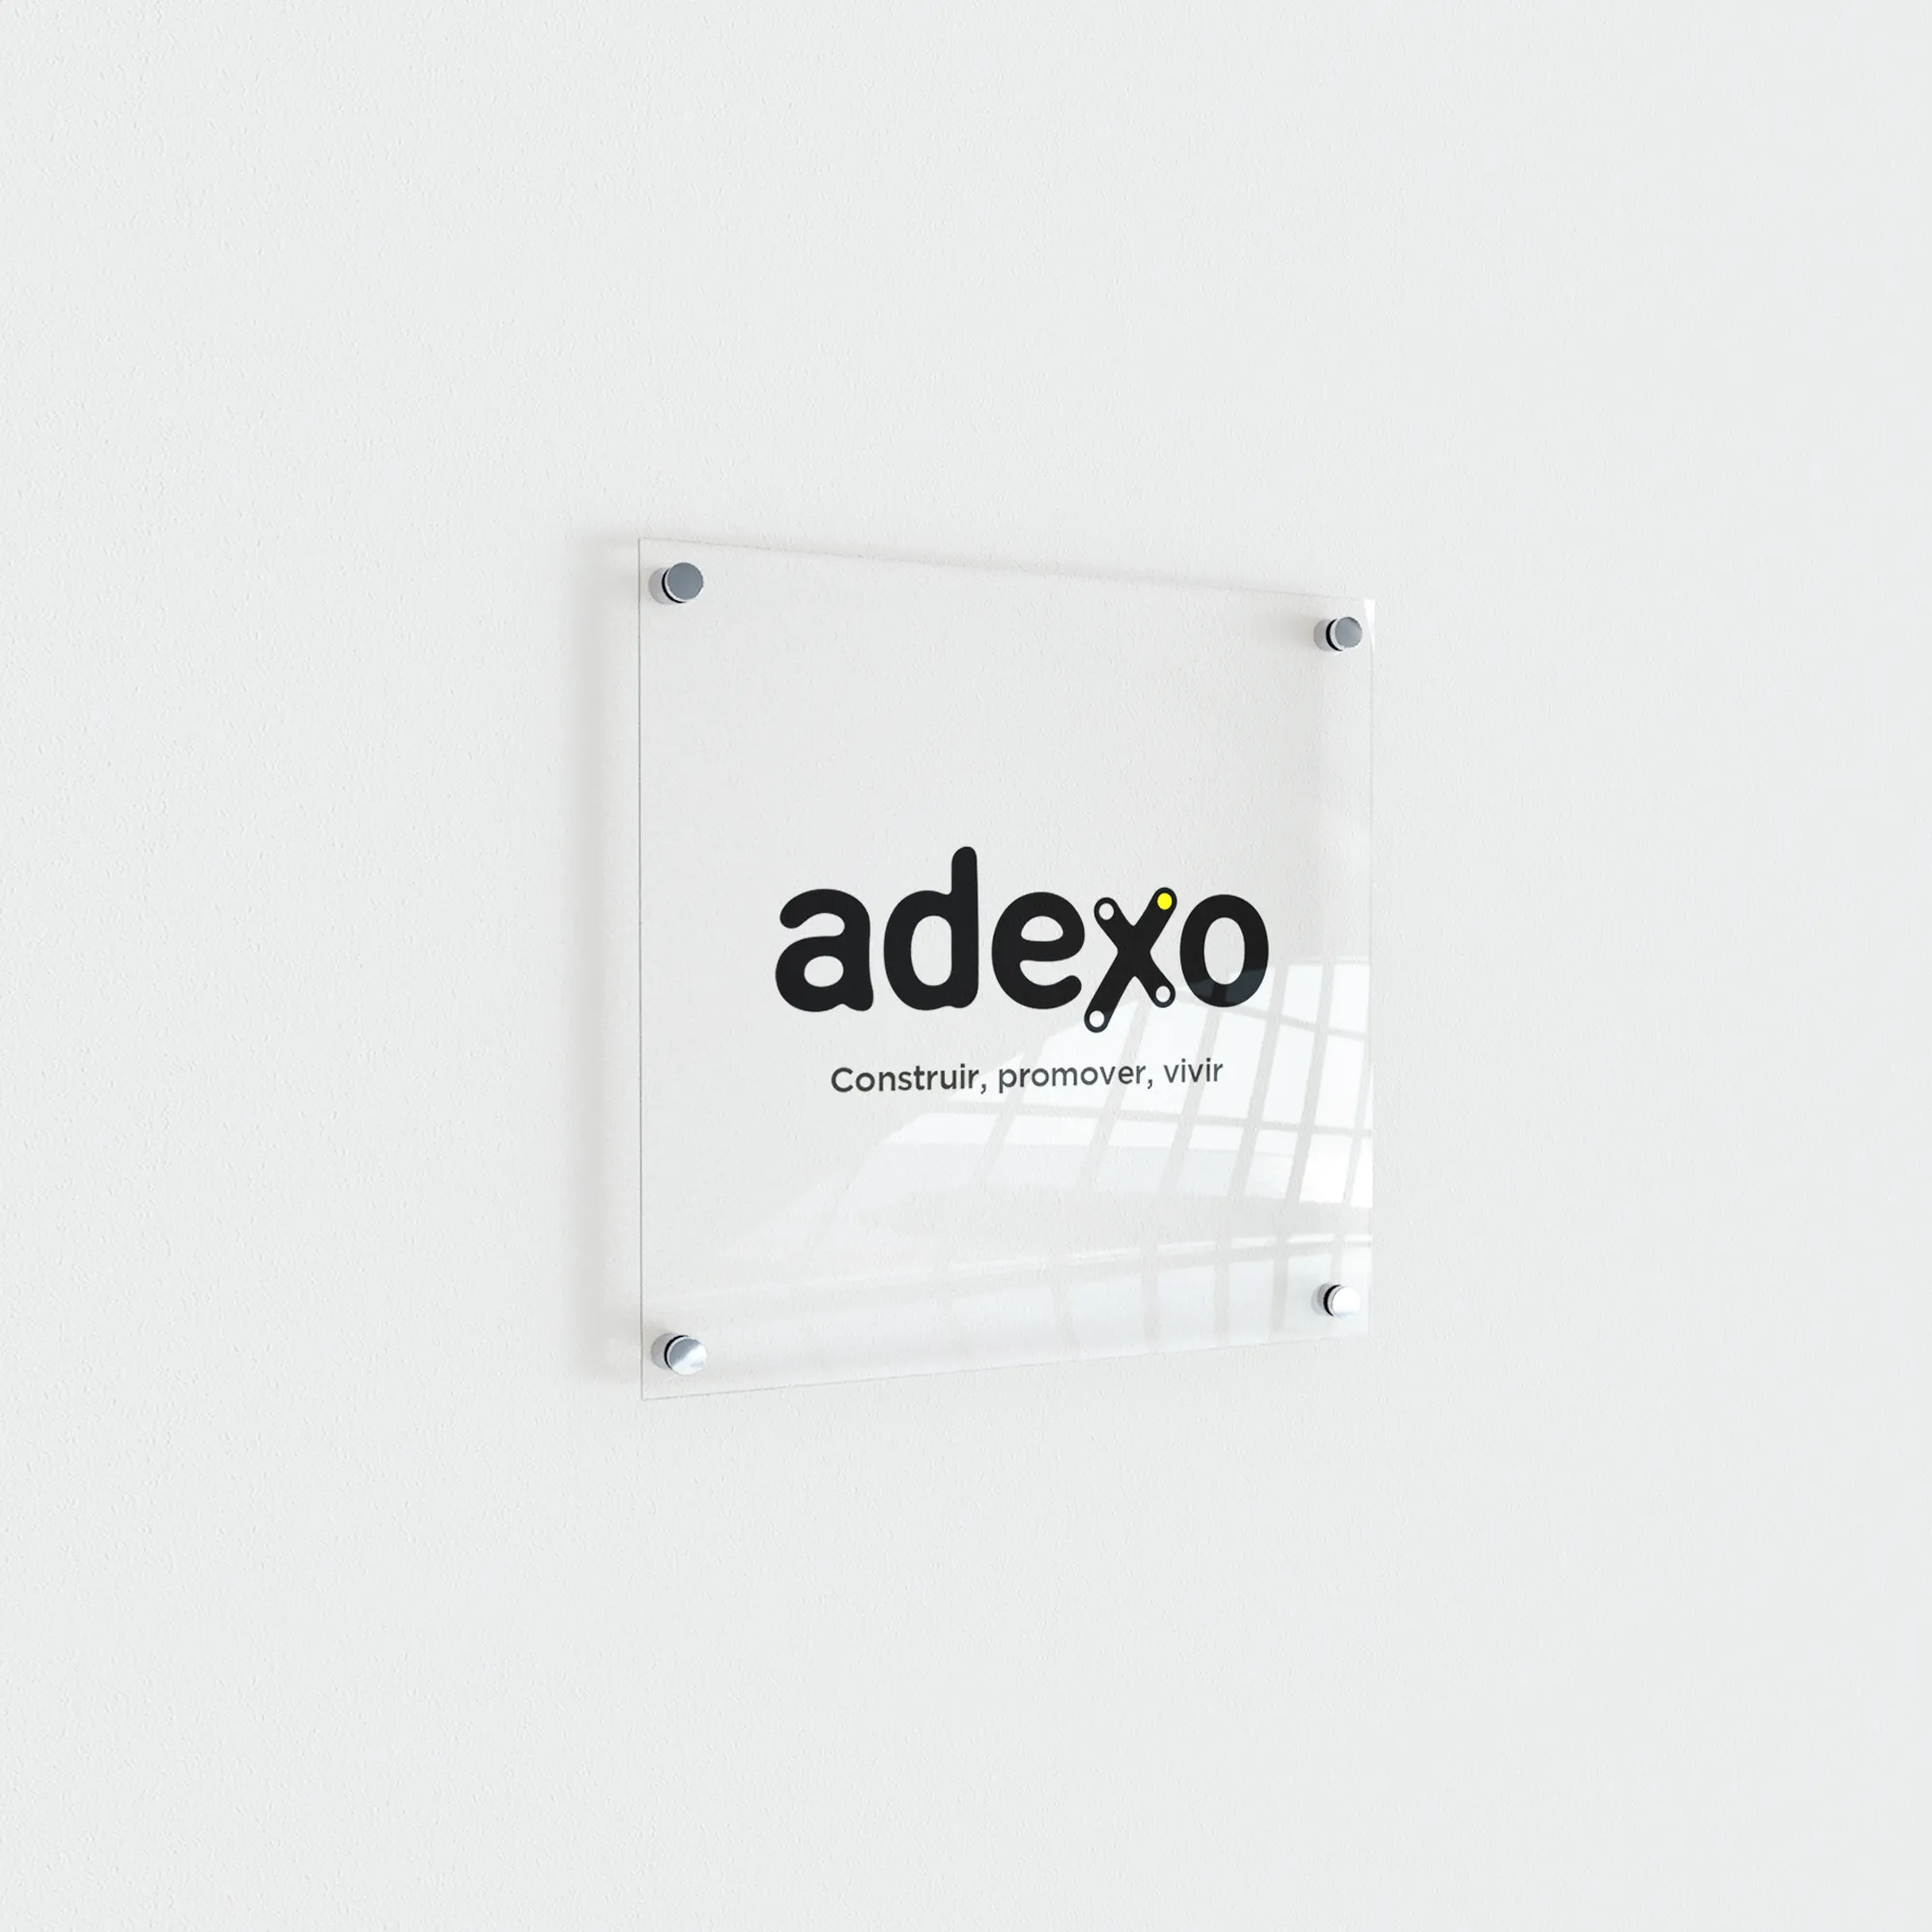 Logotipo de adexo sobre placa de metacrilato